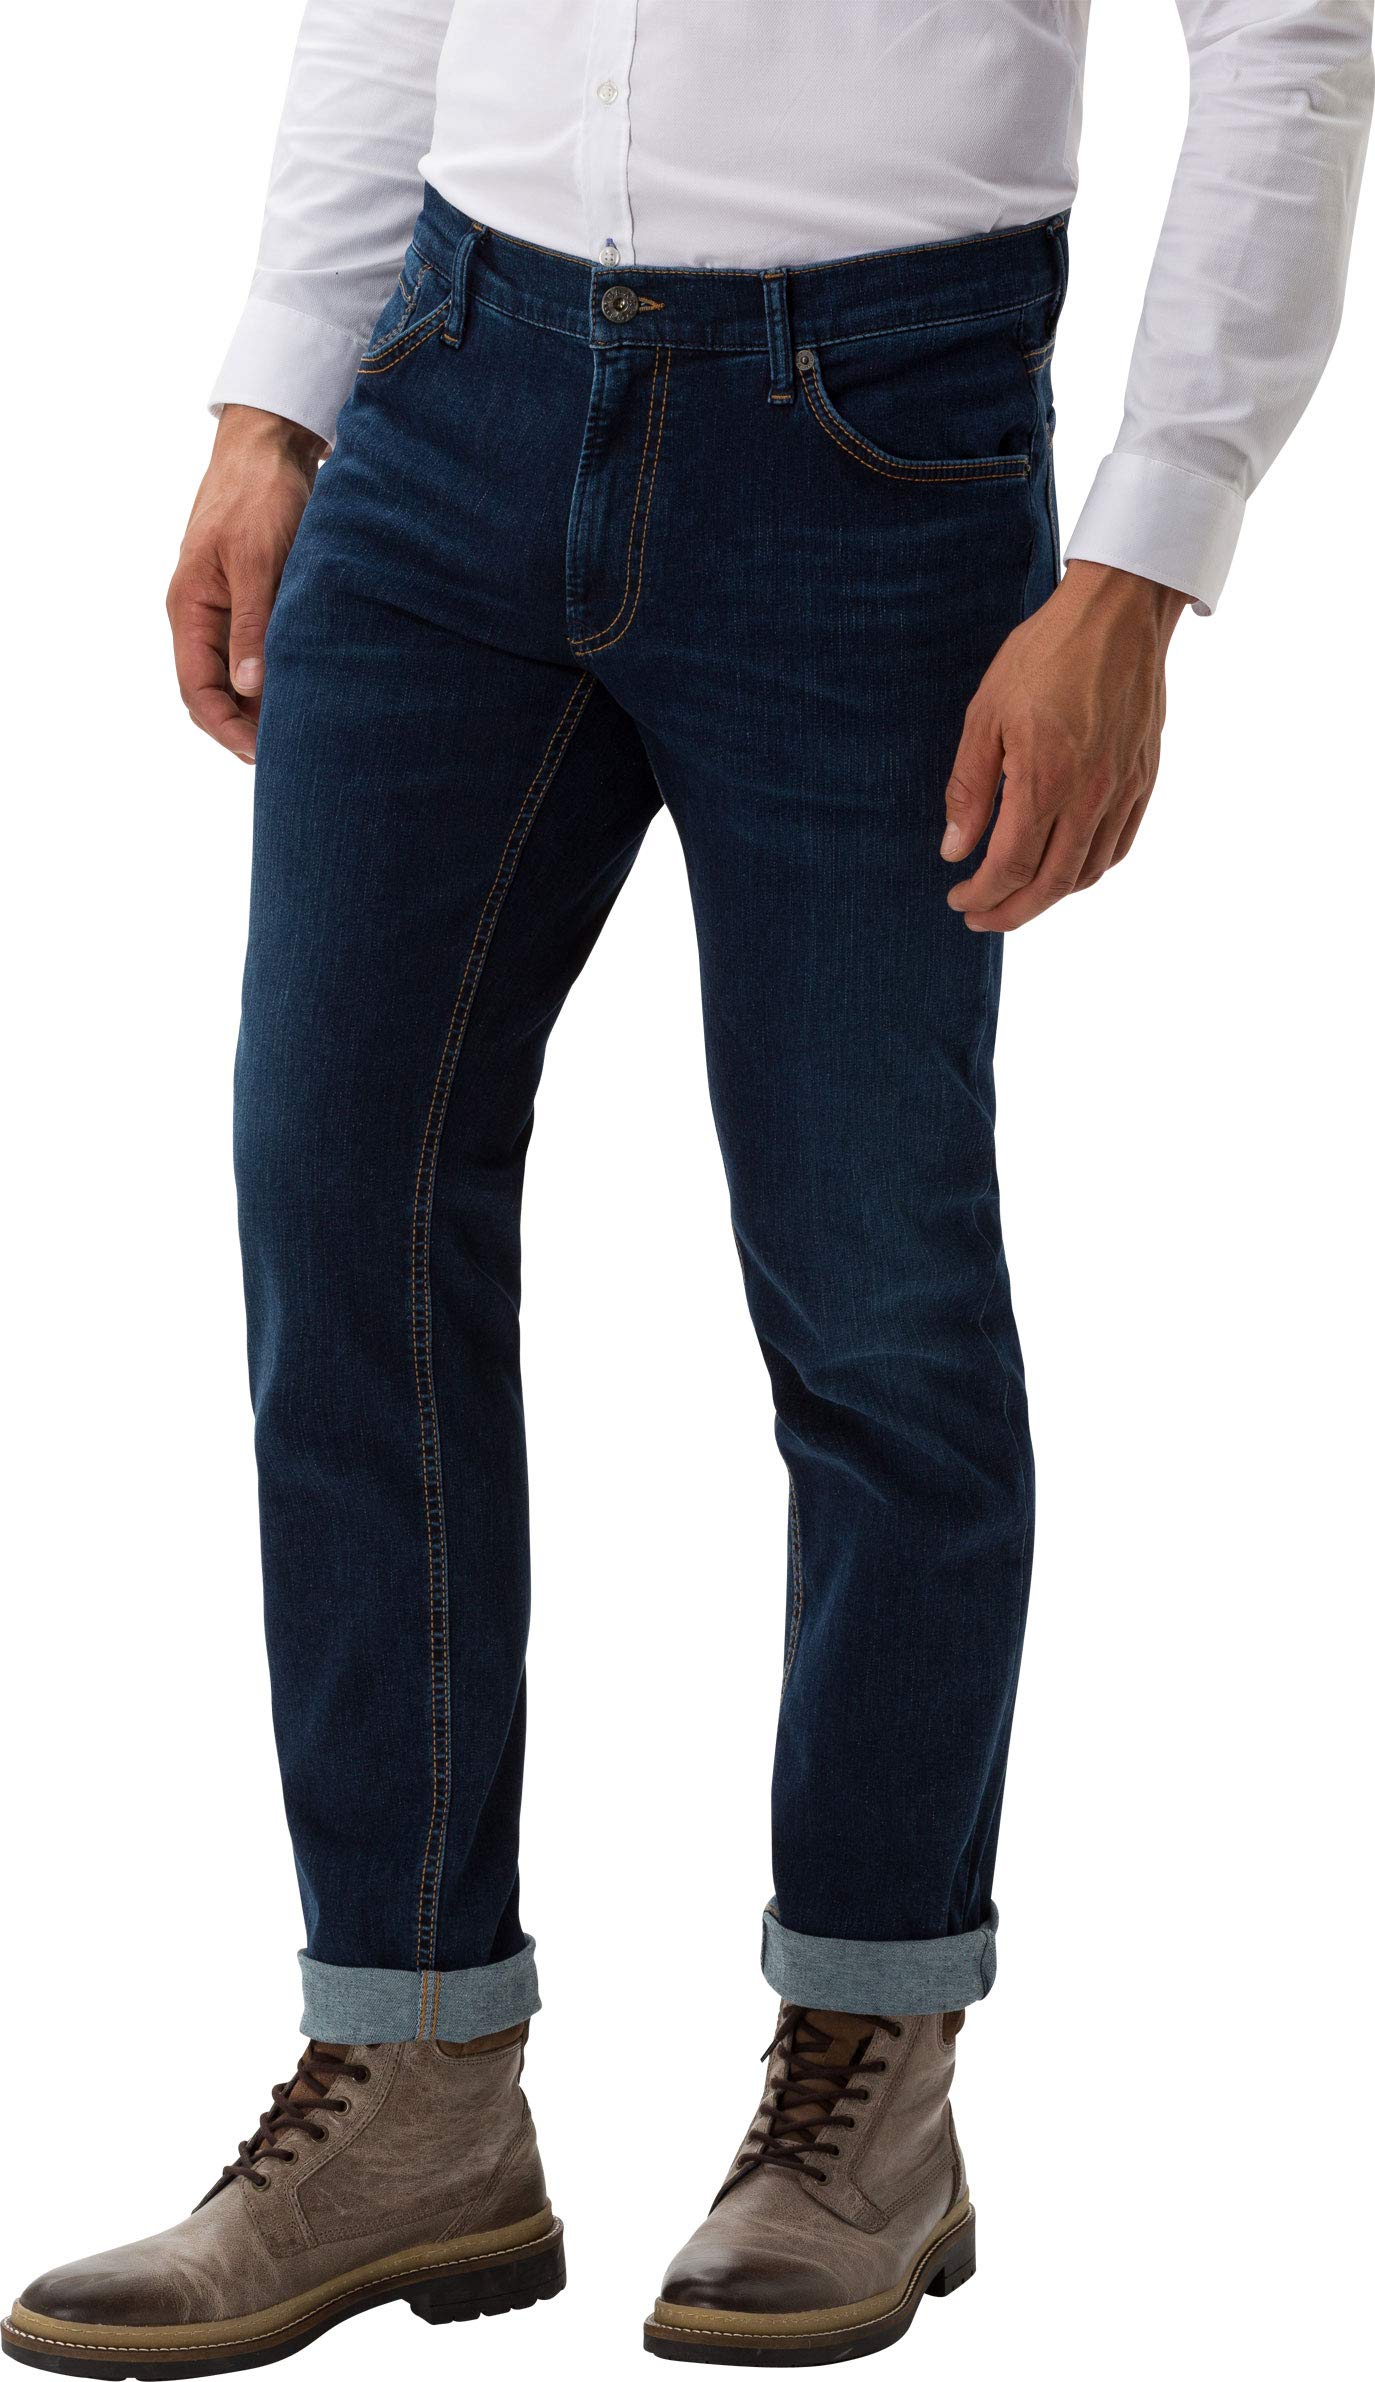 BRAX Herren Slim Fit Jeans Hose Style Chuck Hi-Flex Stretch Baumwolle, STONE BLUE USED, 35W / 30L